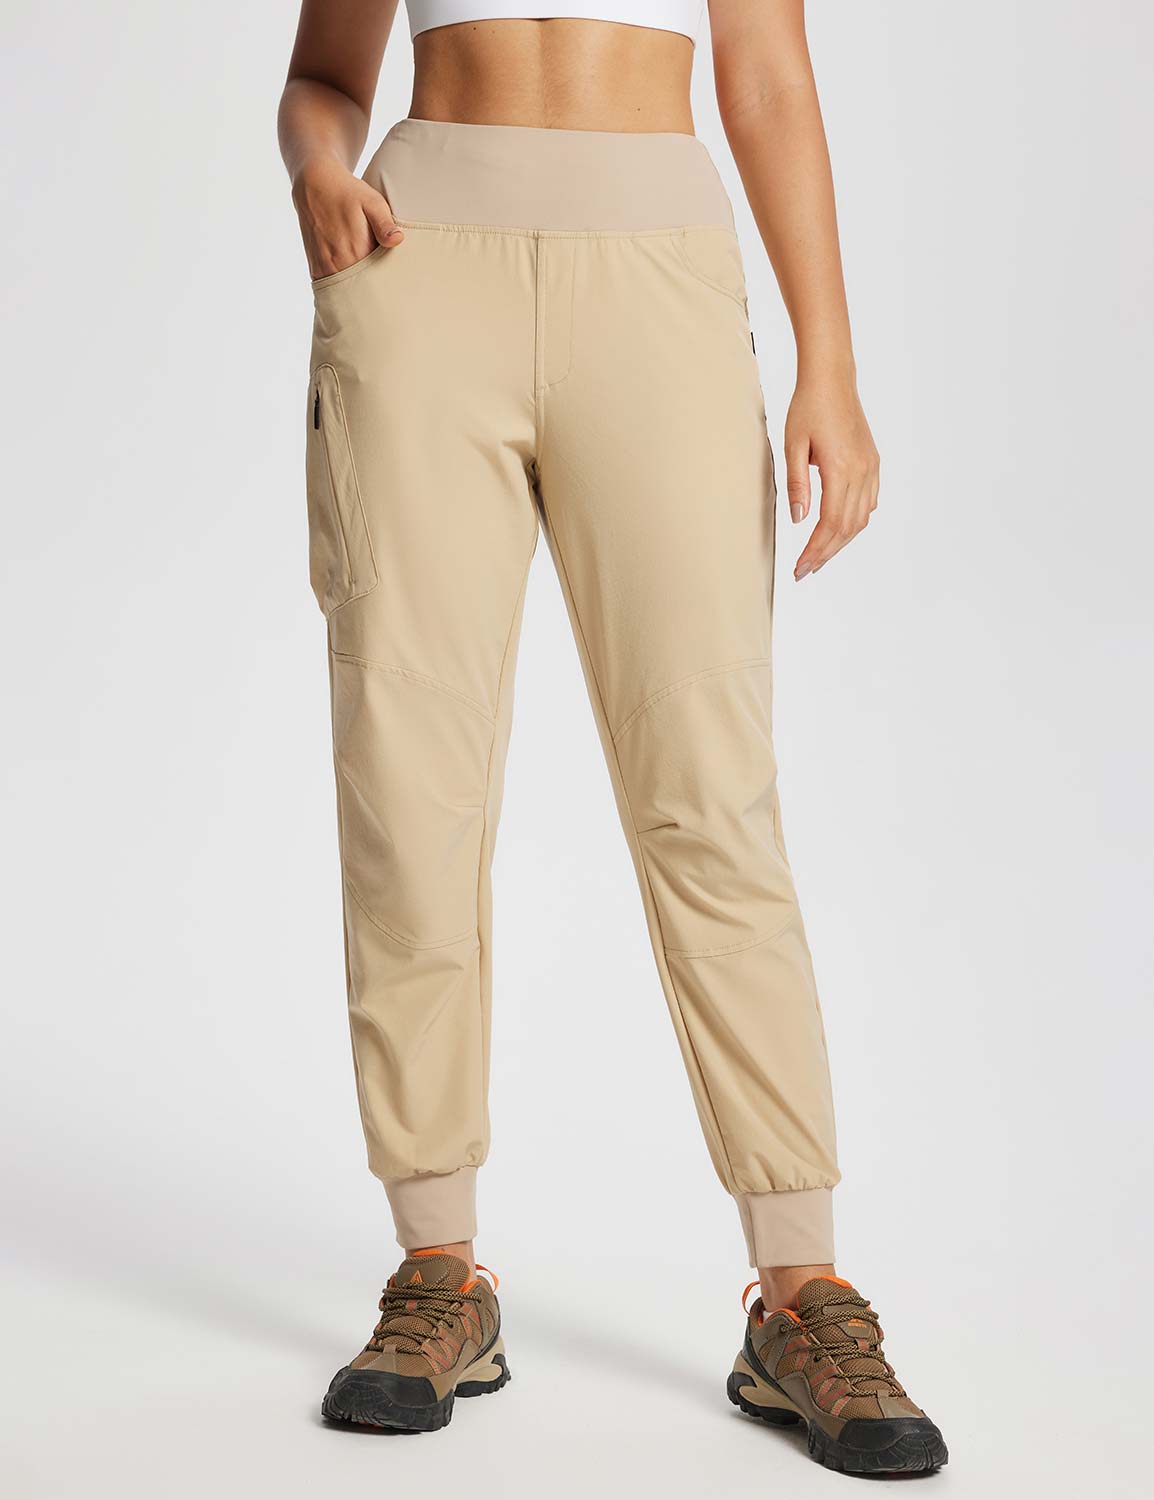 Baleaf BALEAF Womens Golf Pants with Pockets Stretch Slim High Waist Quick  Dry